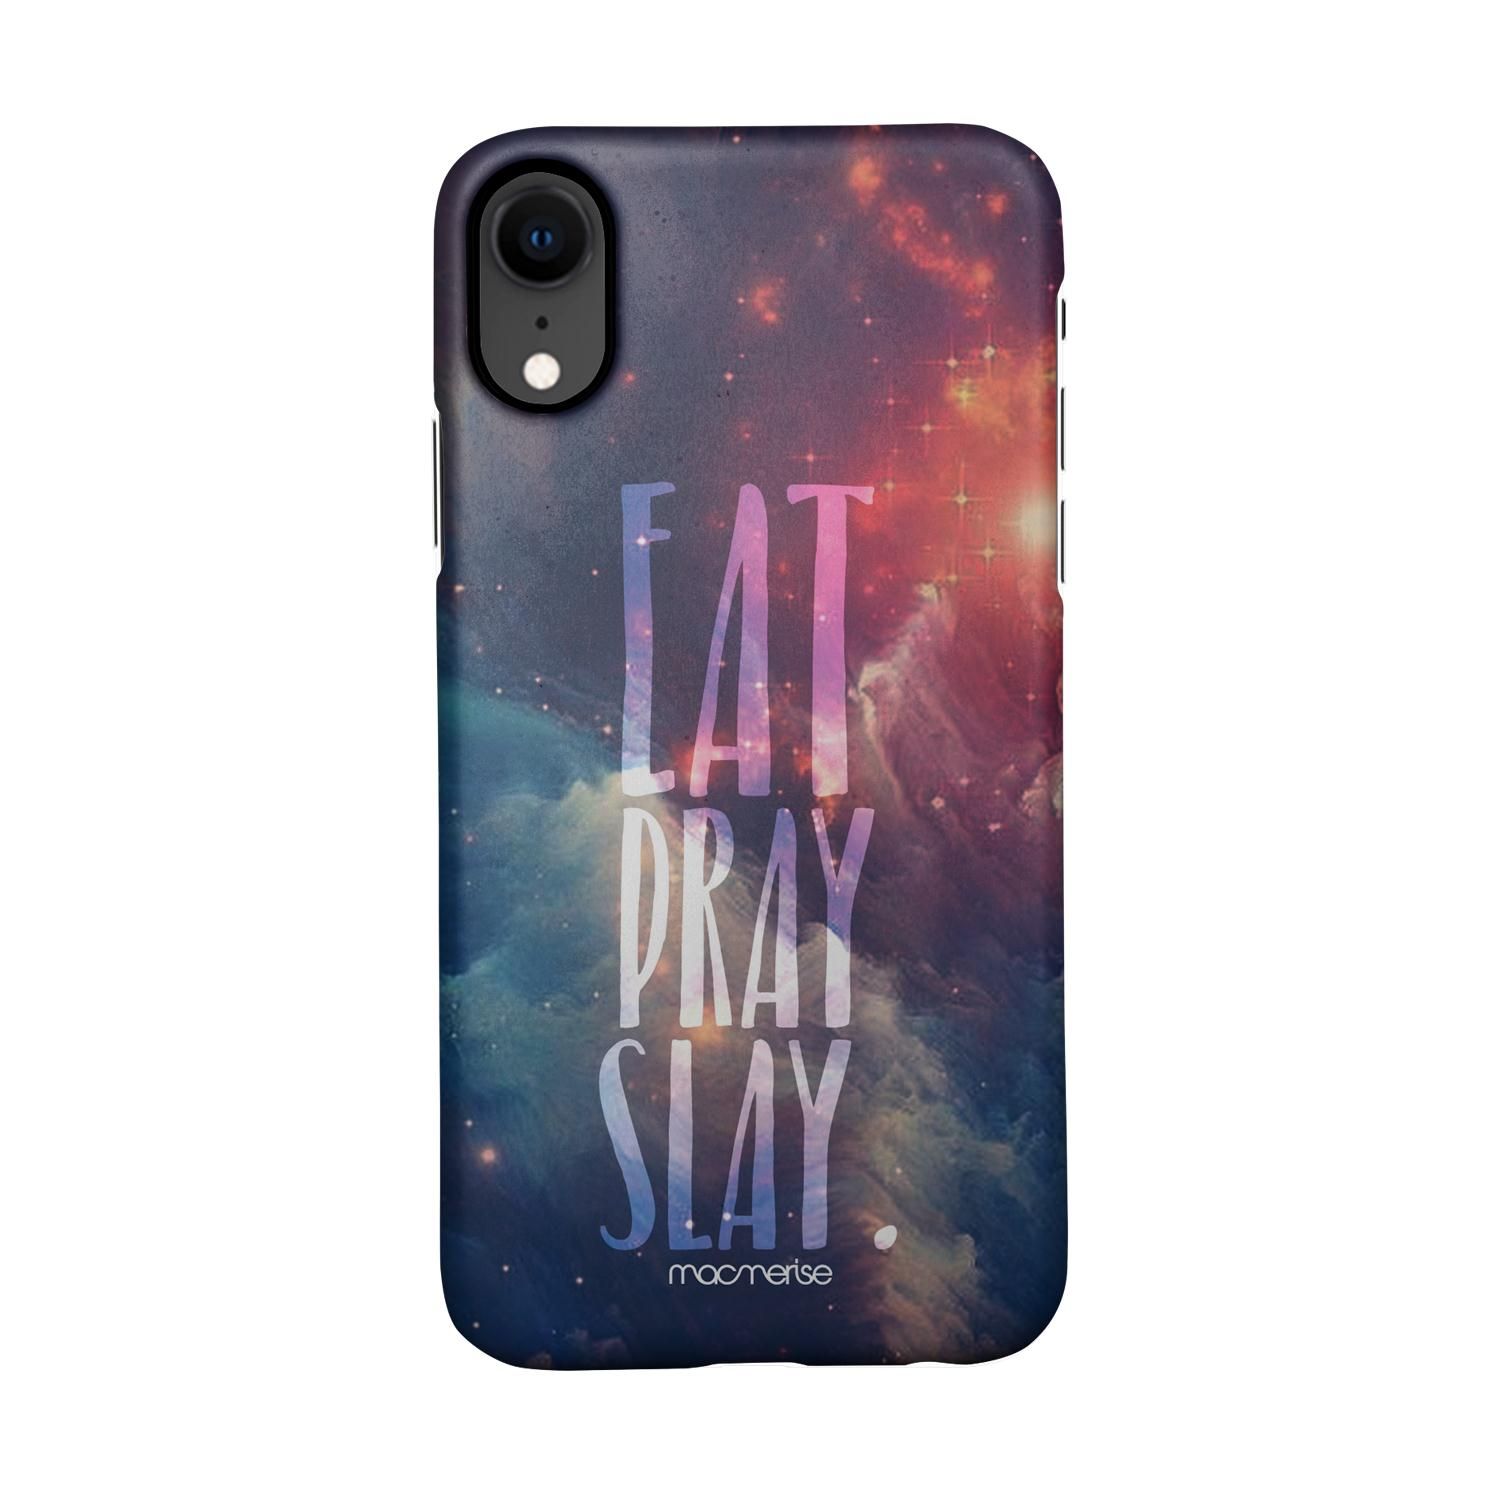 Buy Eat Pray Slay - Sleek Phone Case for iPhone XR Online